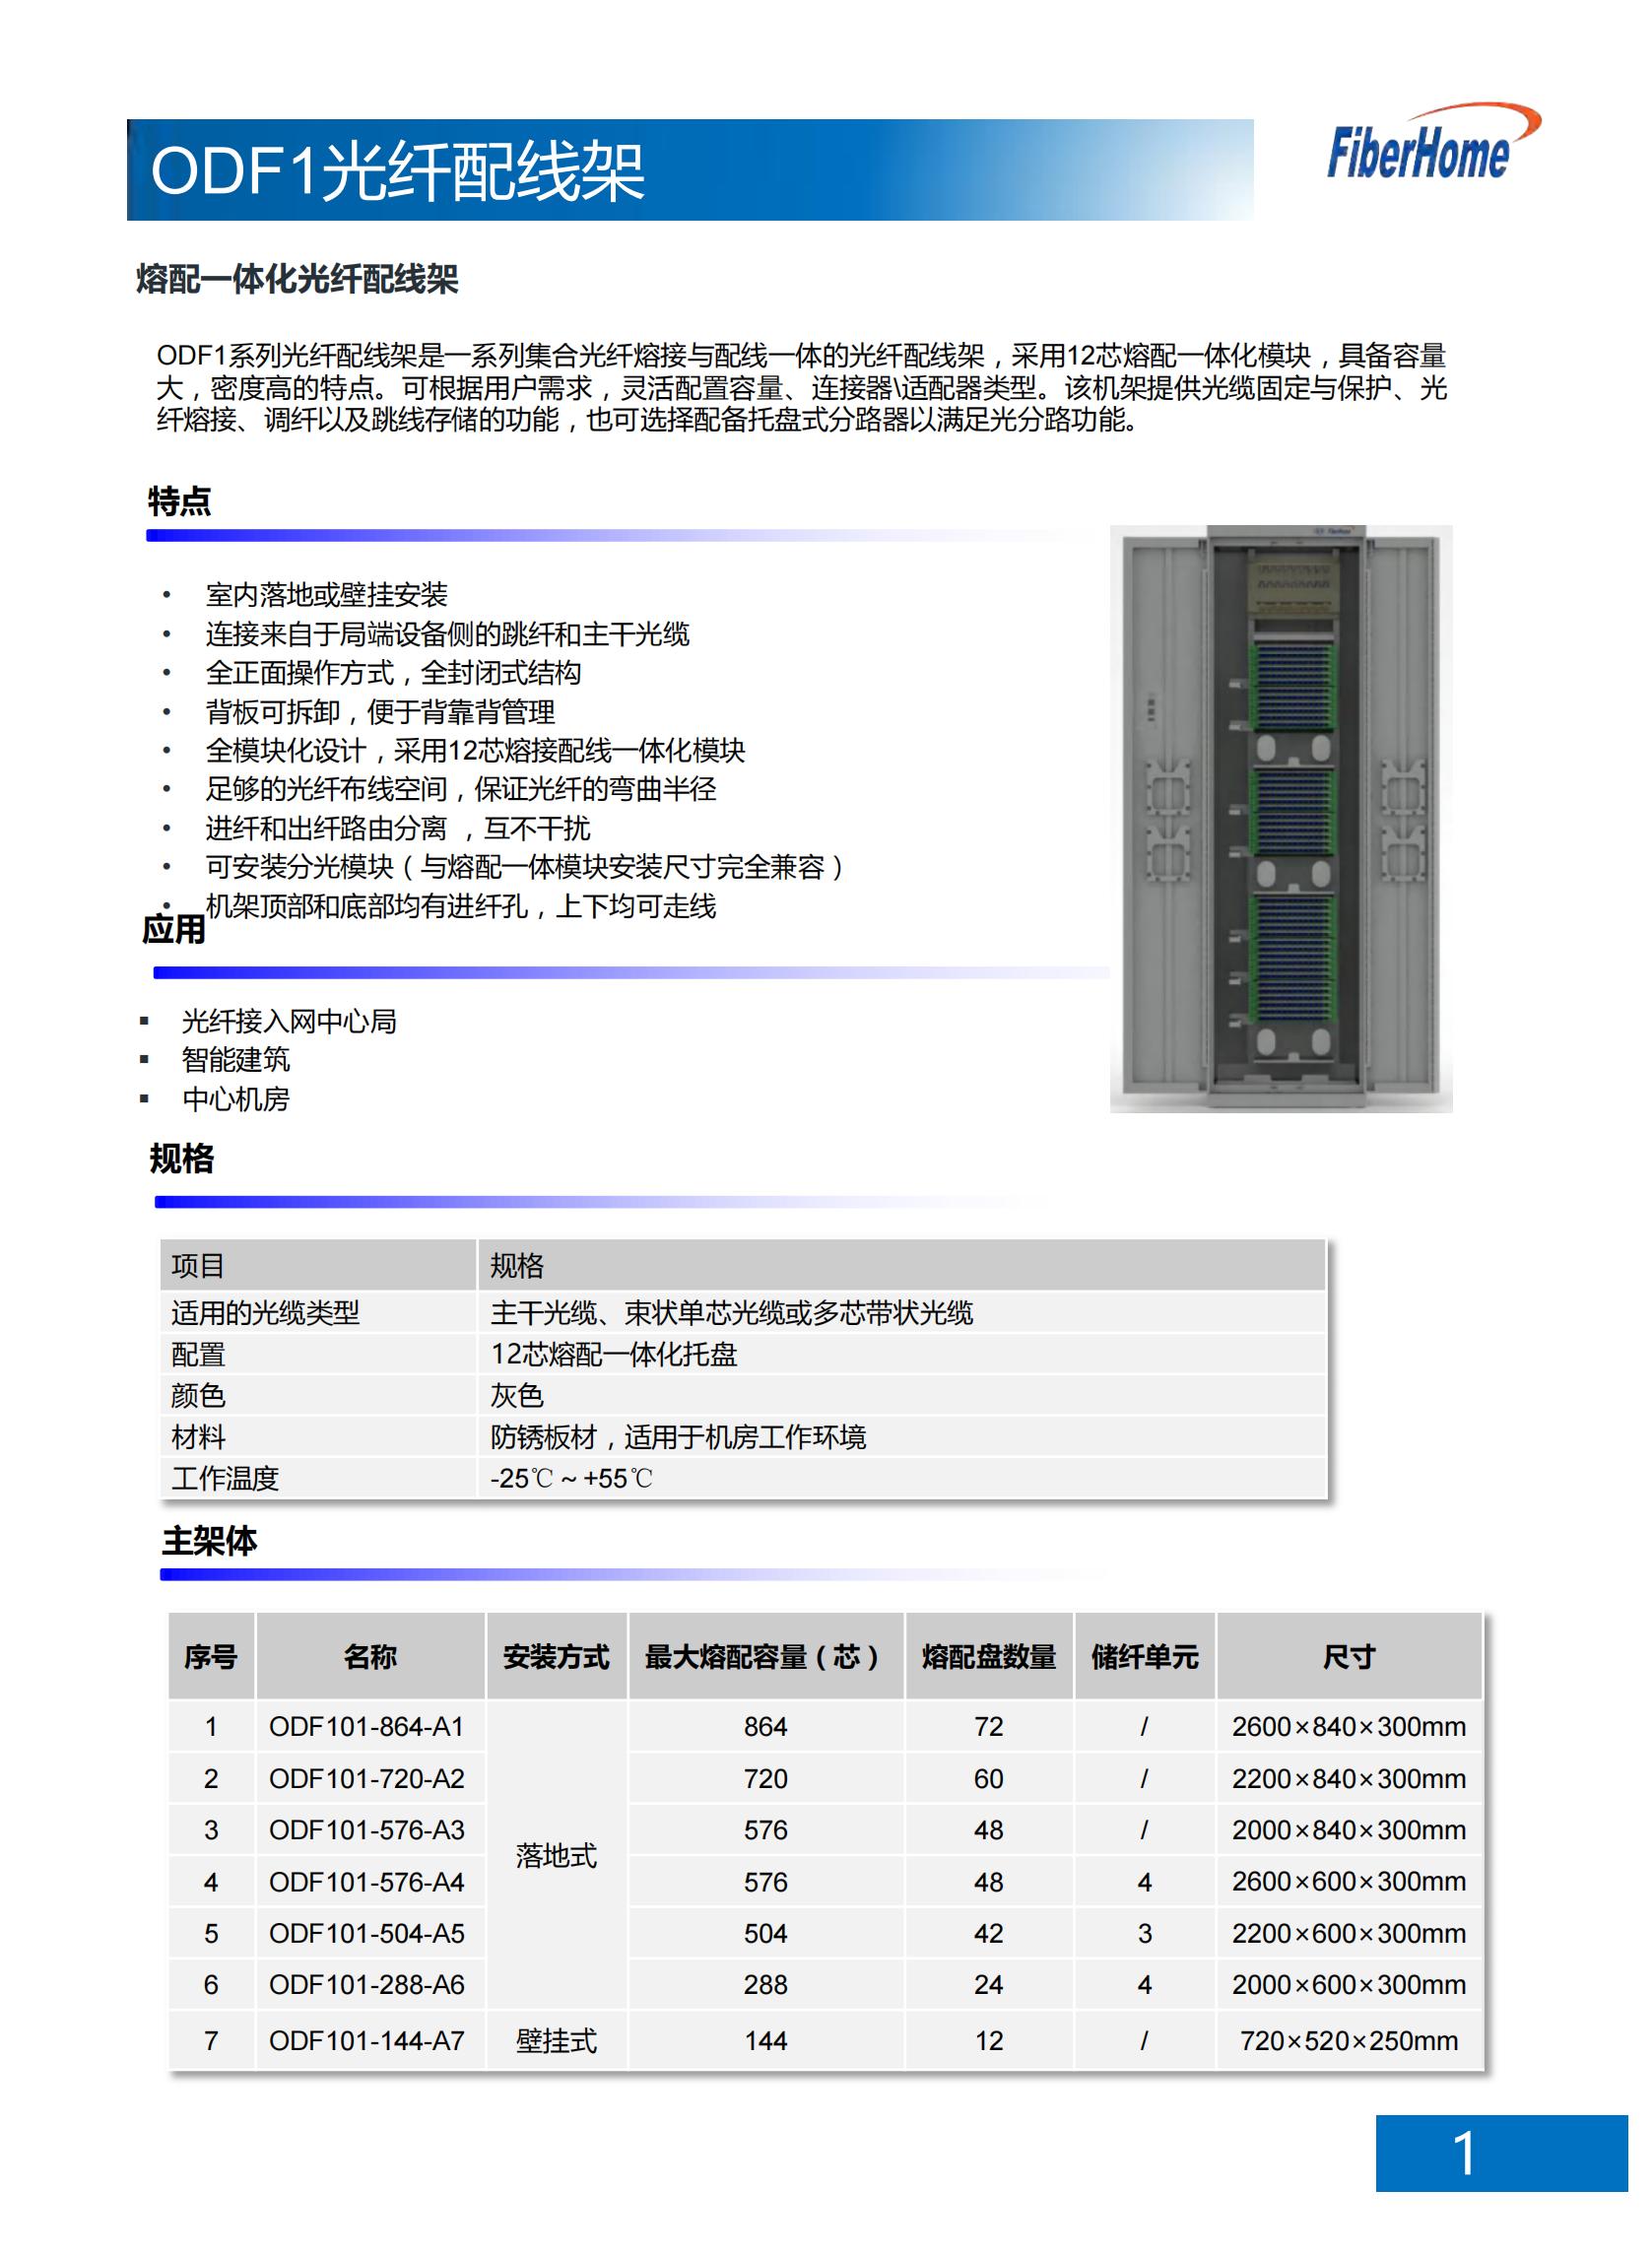 ODF101-864-A1-FC ODF光纤配线架 （864芯落地式 无子框型 全部含12芯FC熔配一体化单元）